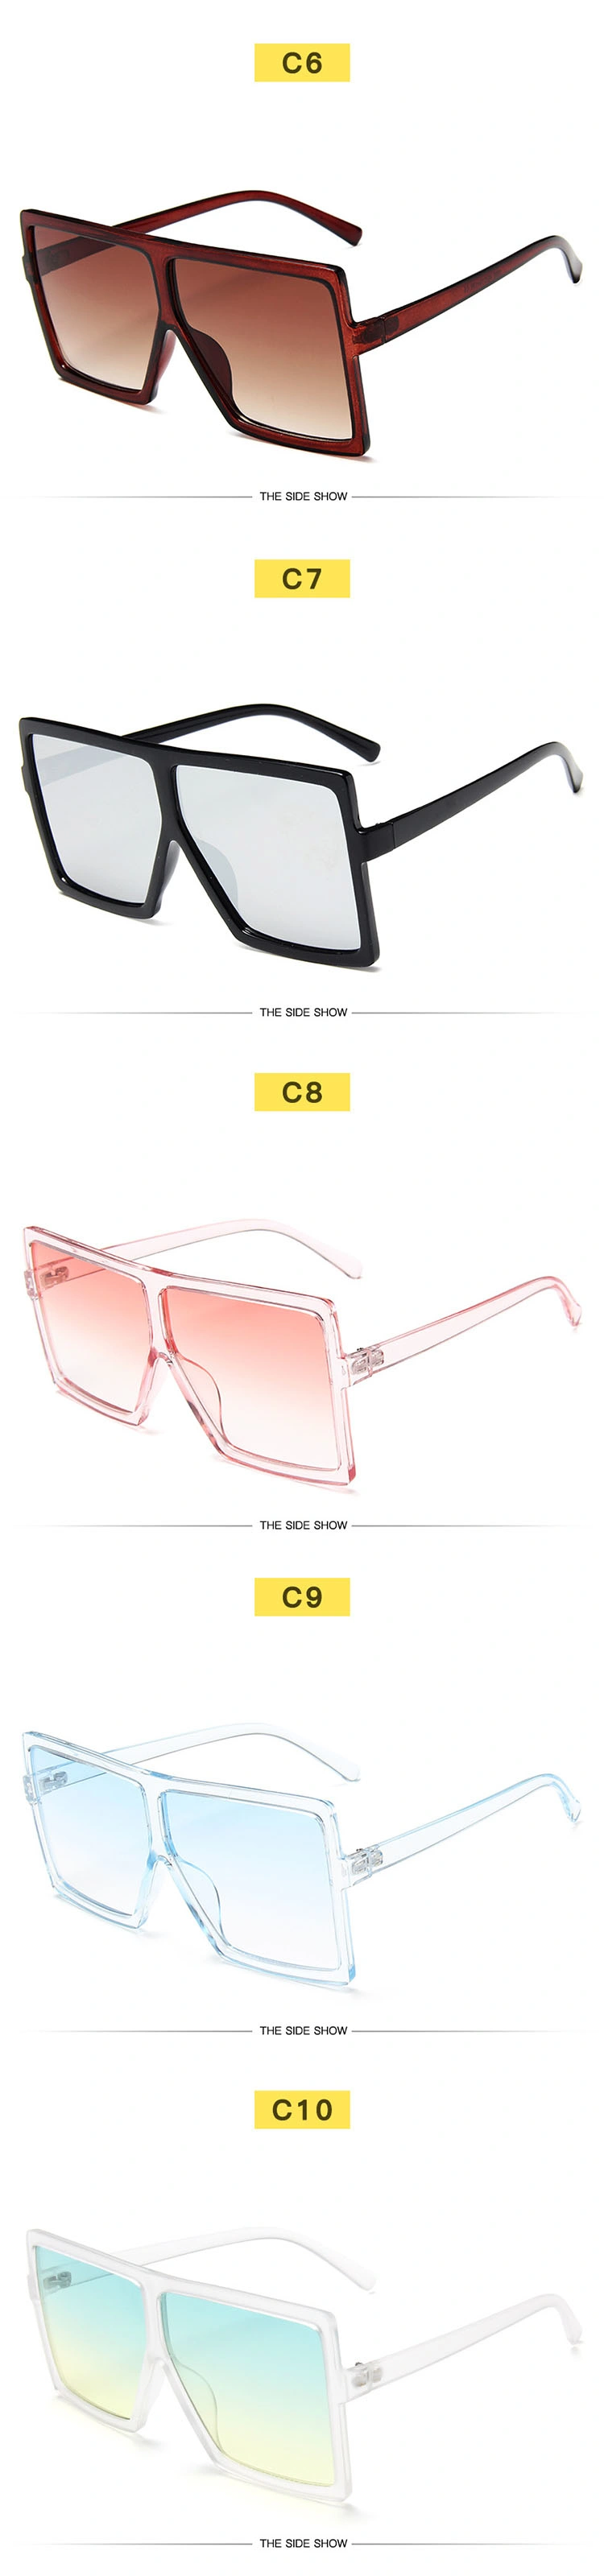 2020 New Sunglasses European and American Retro Large Frame Sunglasses Trend Sunglasses Square Frame Metal Hinge Glasses